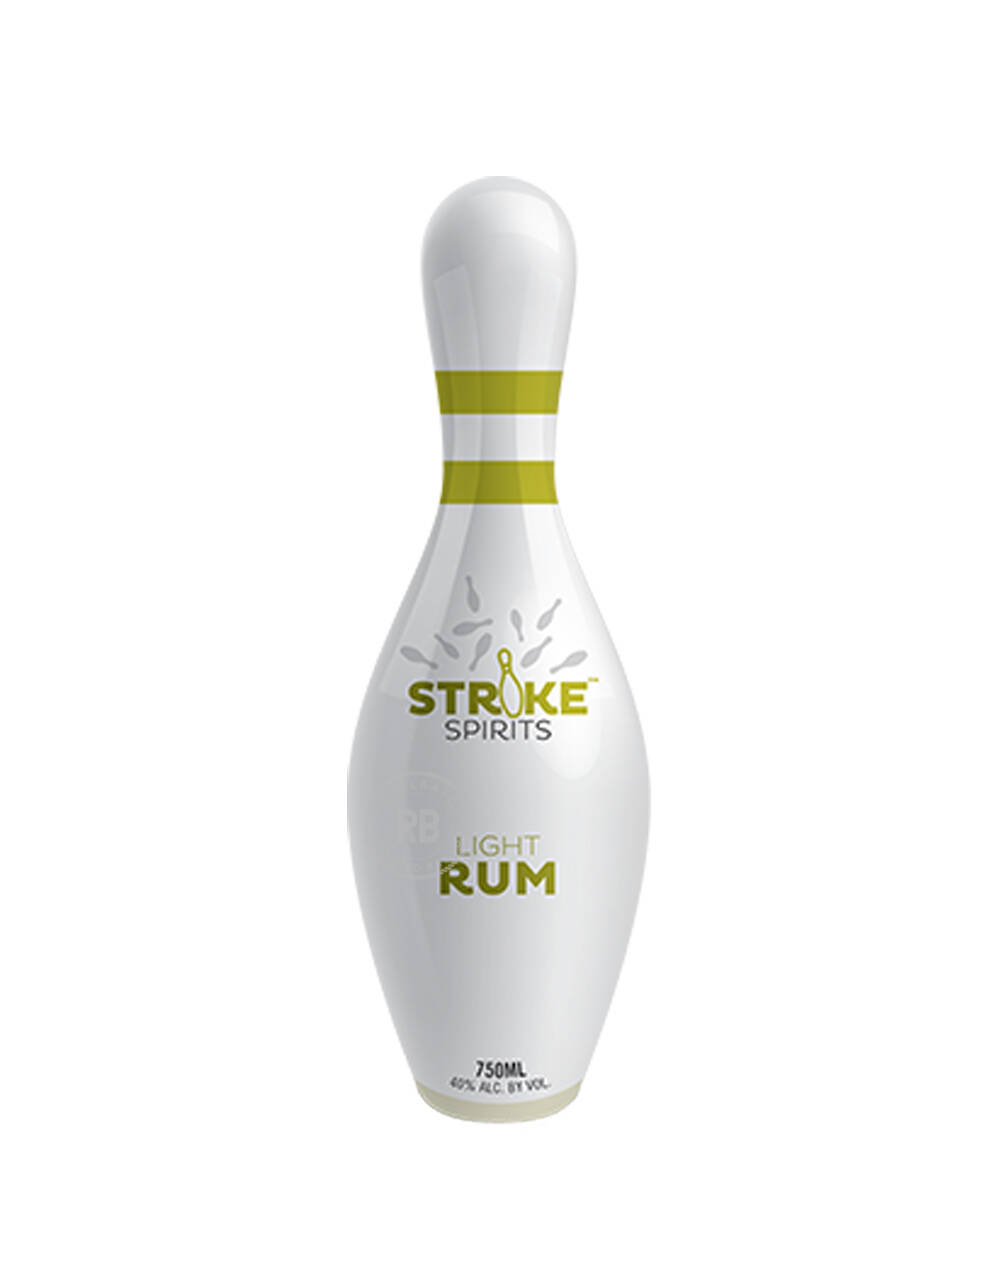 Strike Spirits Light Rum